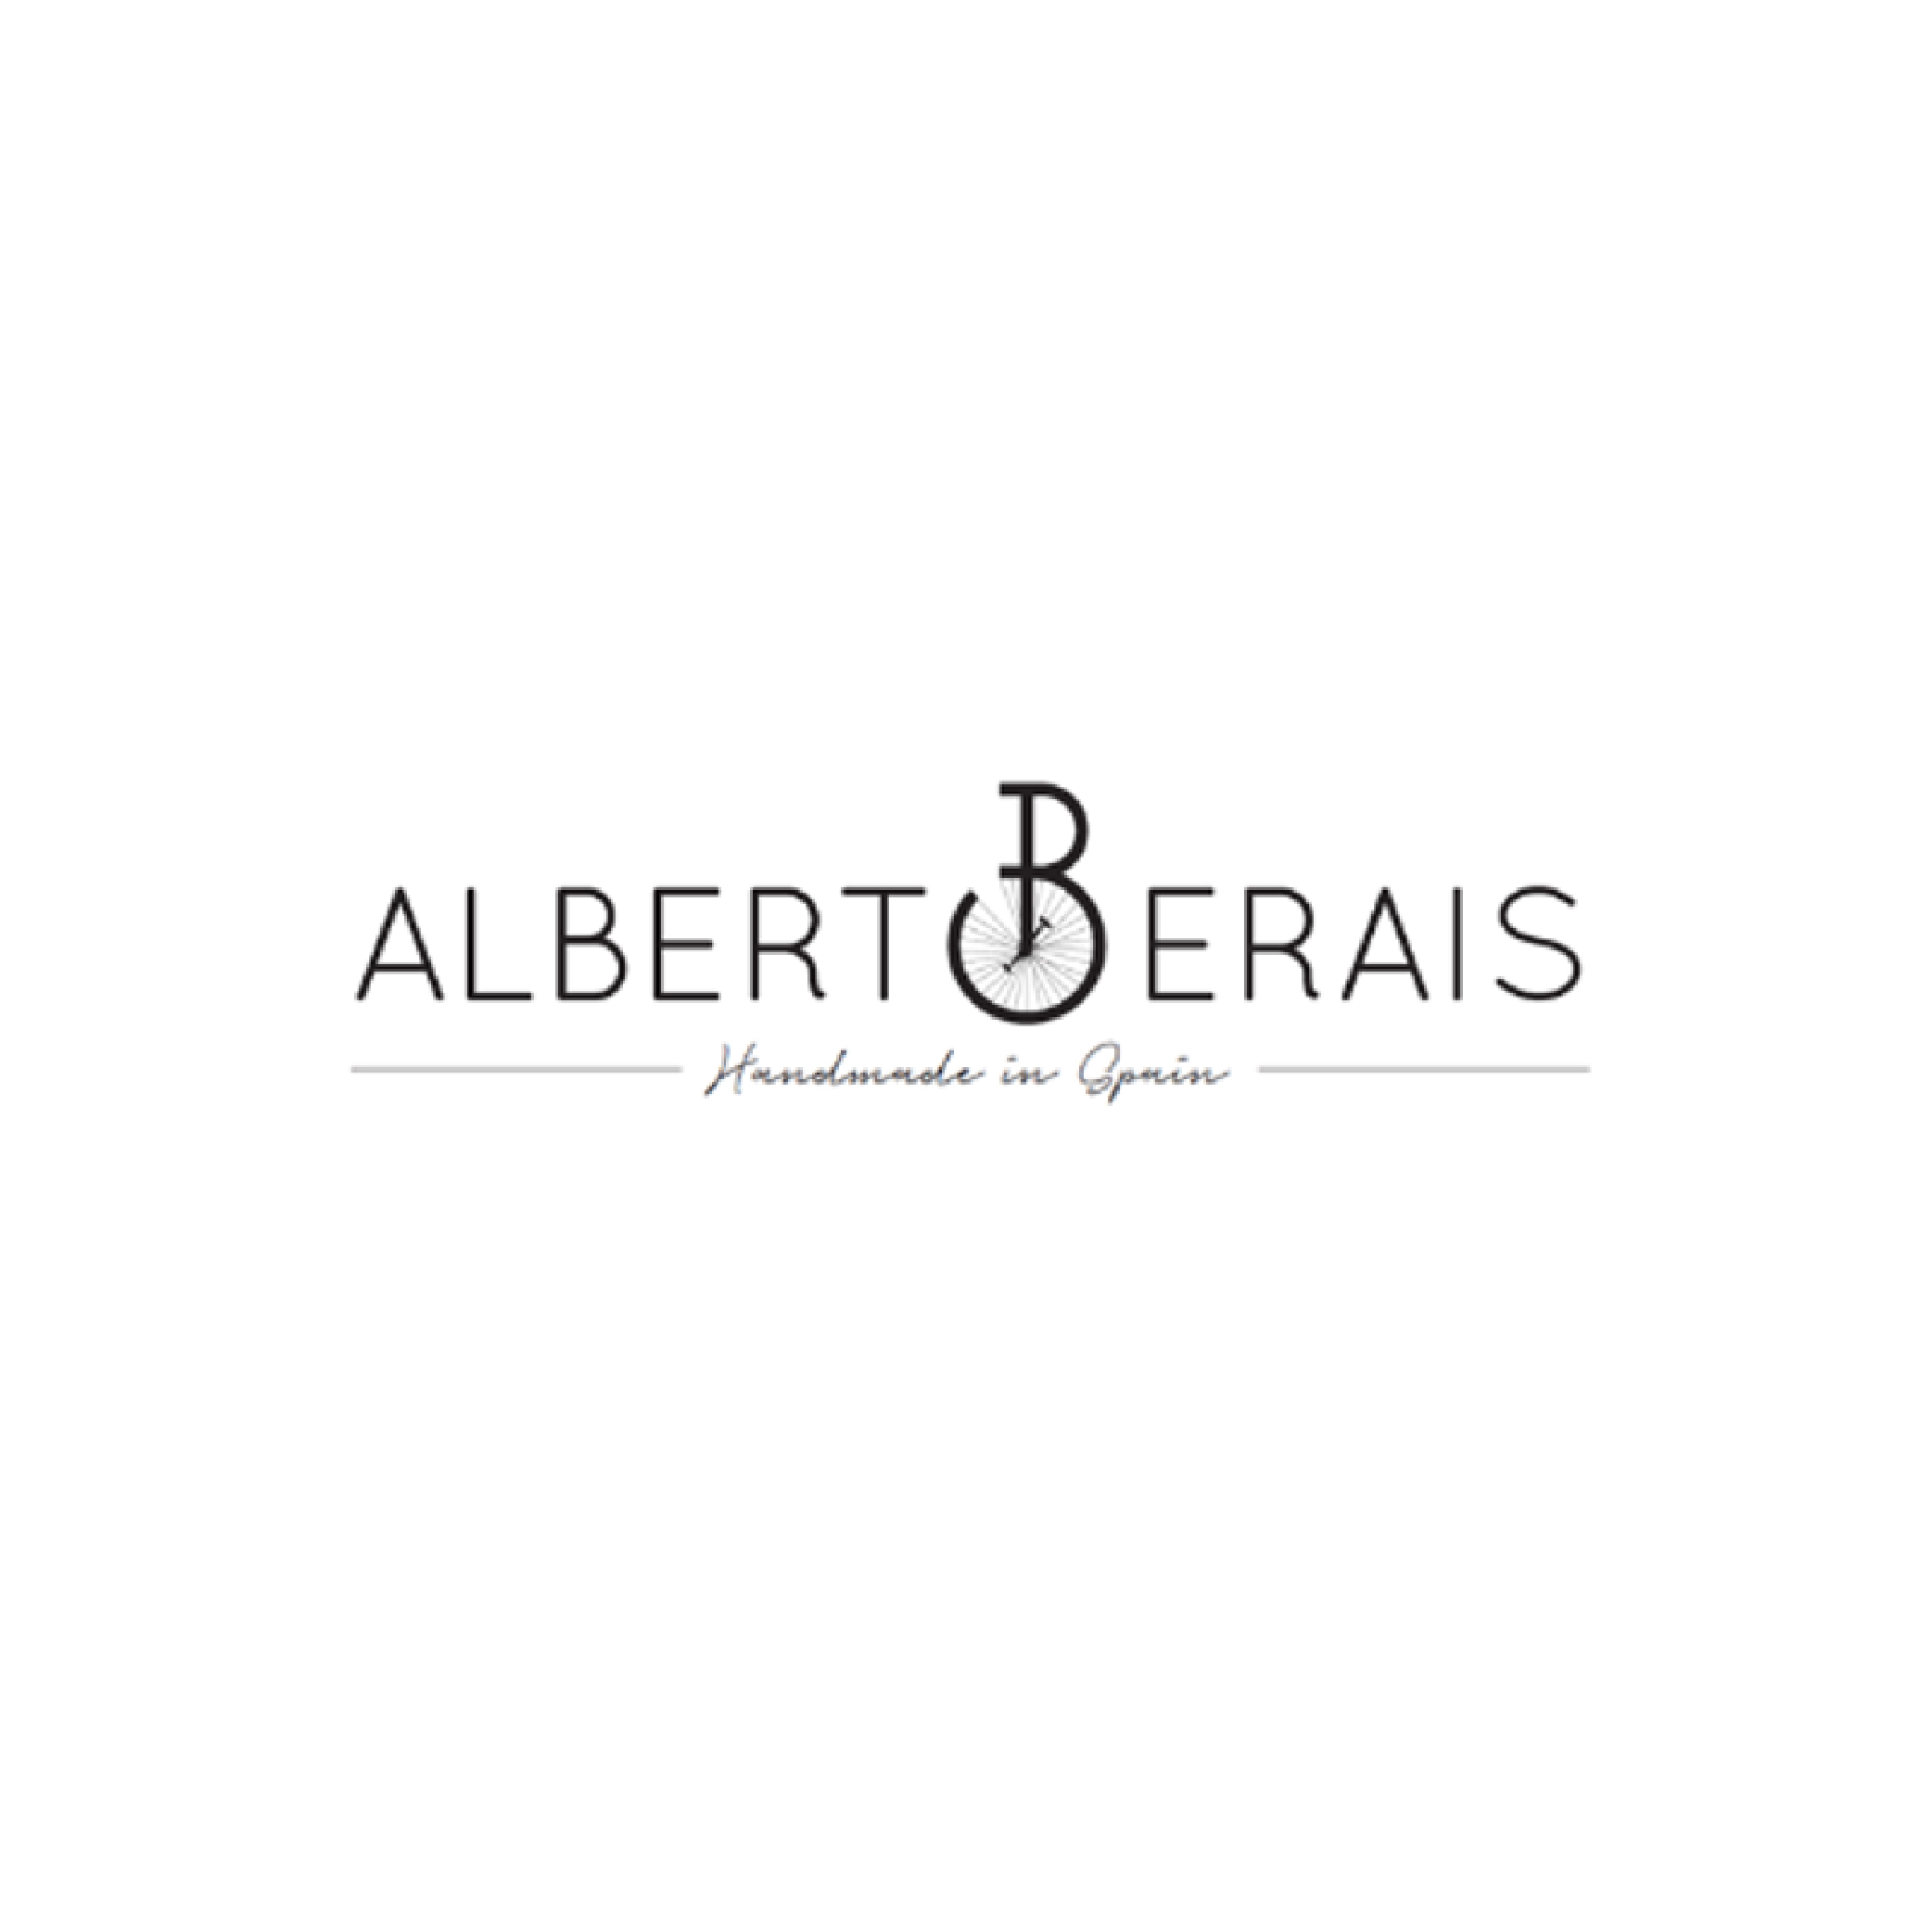 Albert Berais